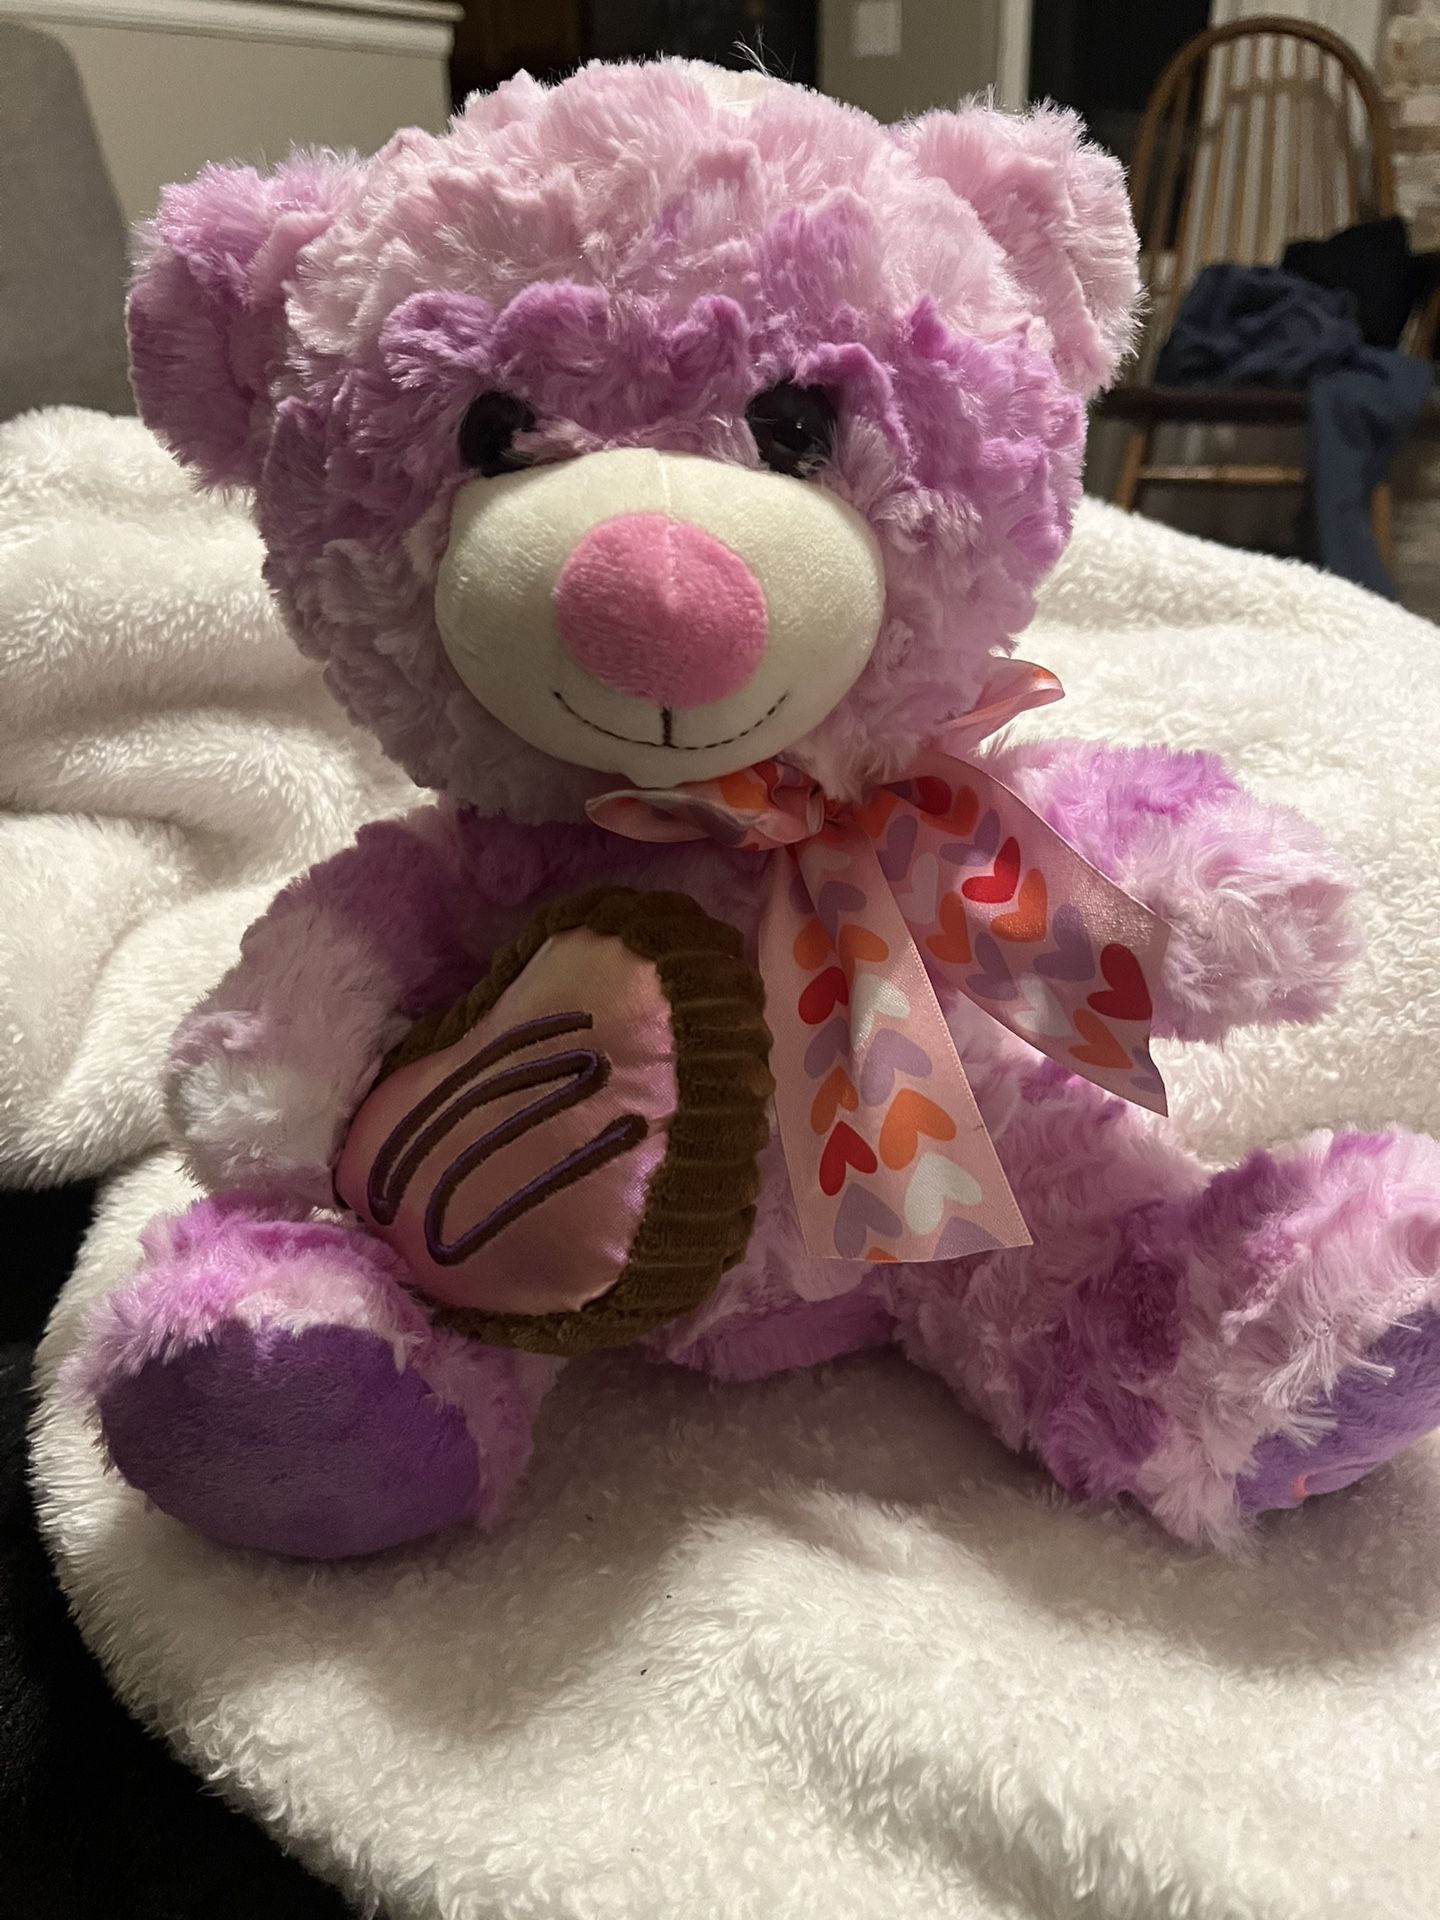 ❤️ Valentine’s Day ❤️ Teddy Bear ❤️ Soft and Cuddly